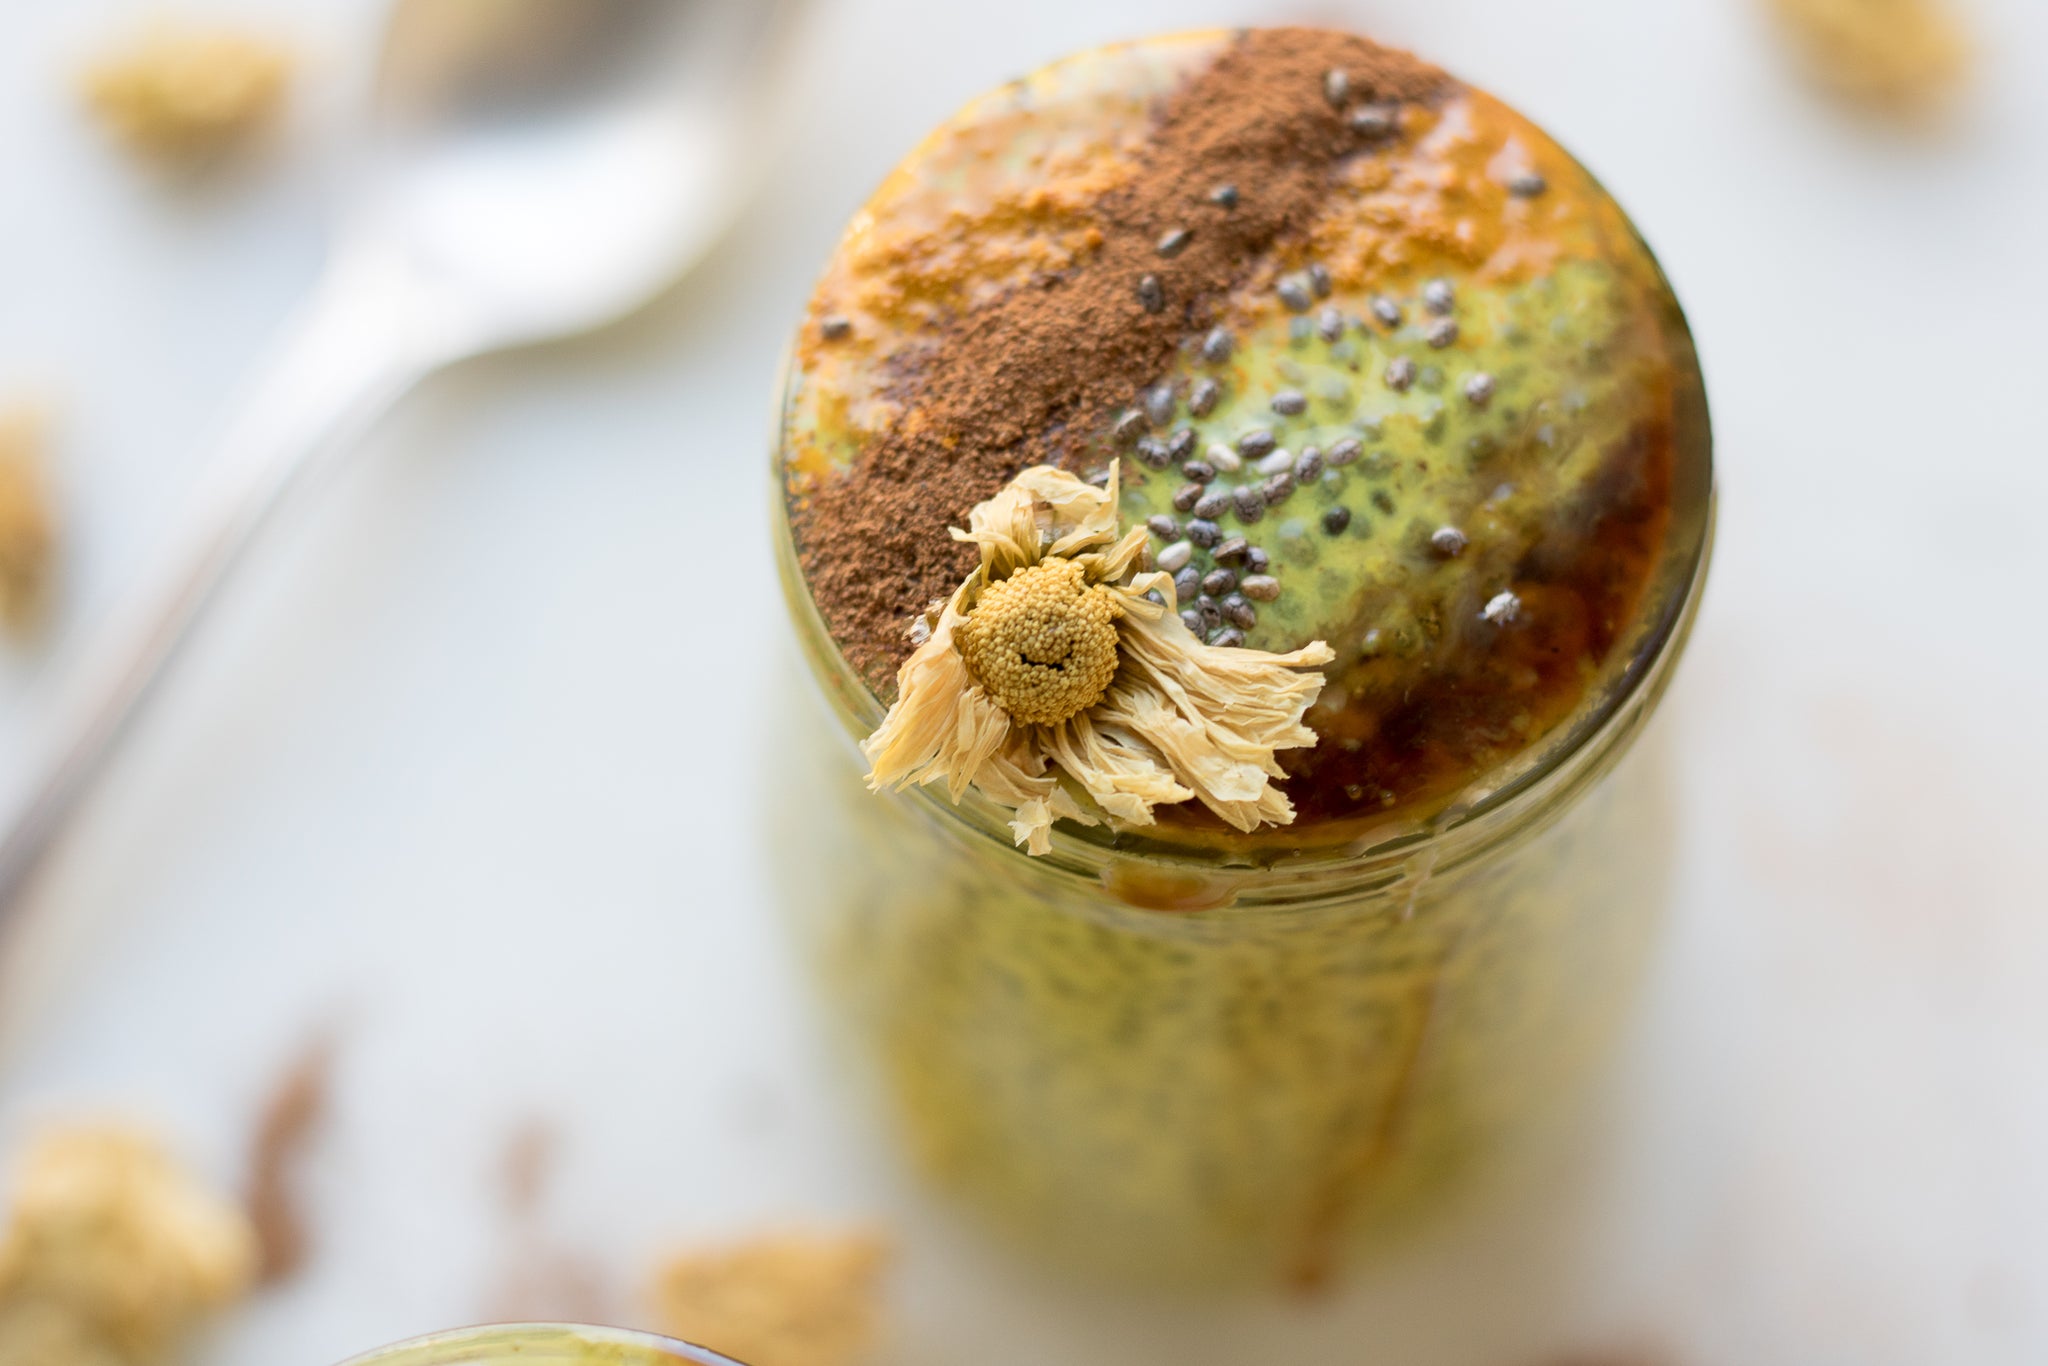 Chrysanthemum-Infused Golden Milk Chia Pudding